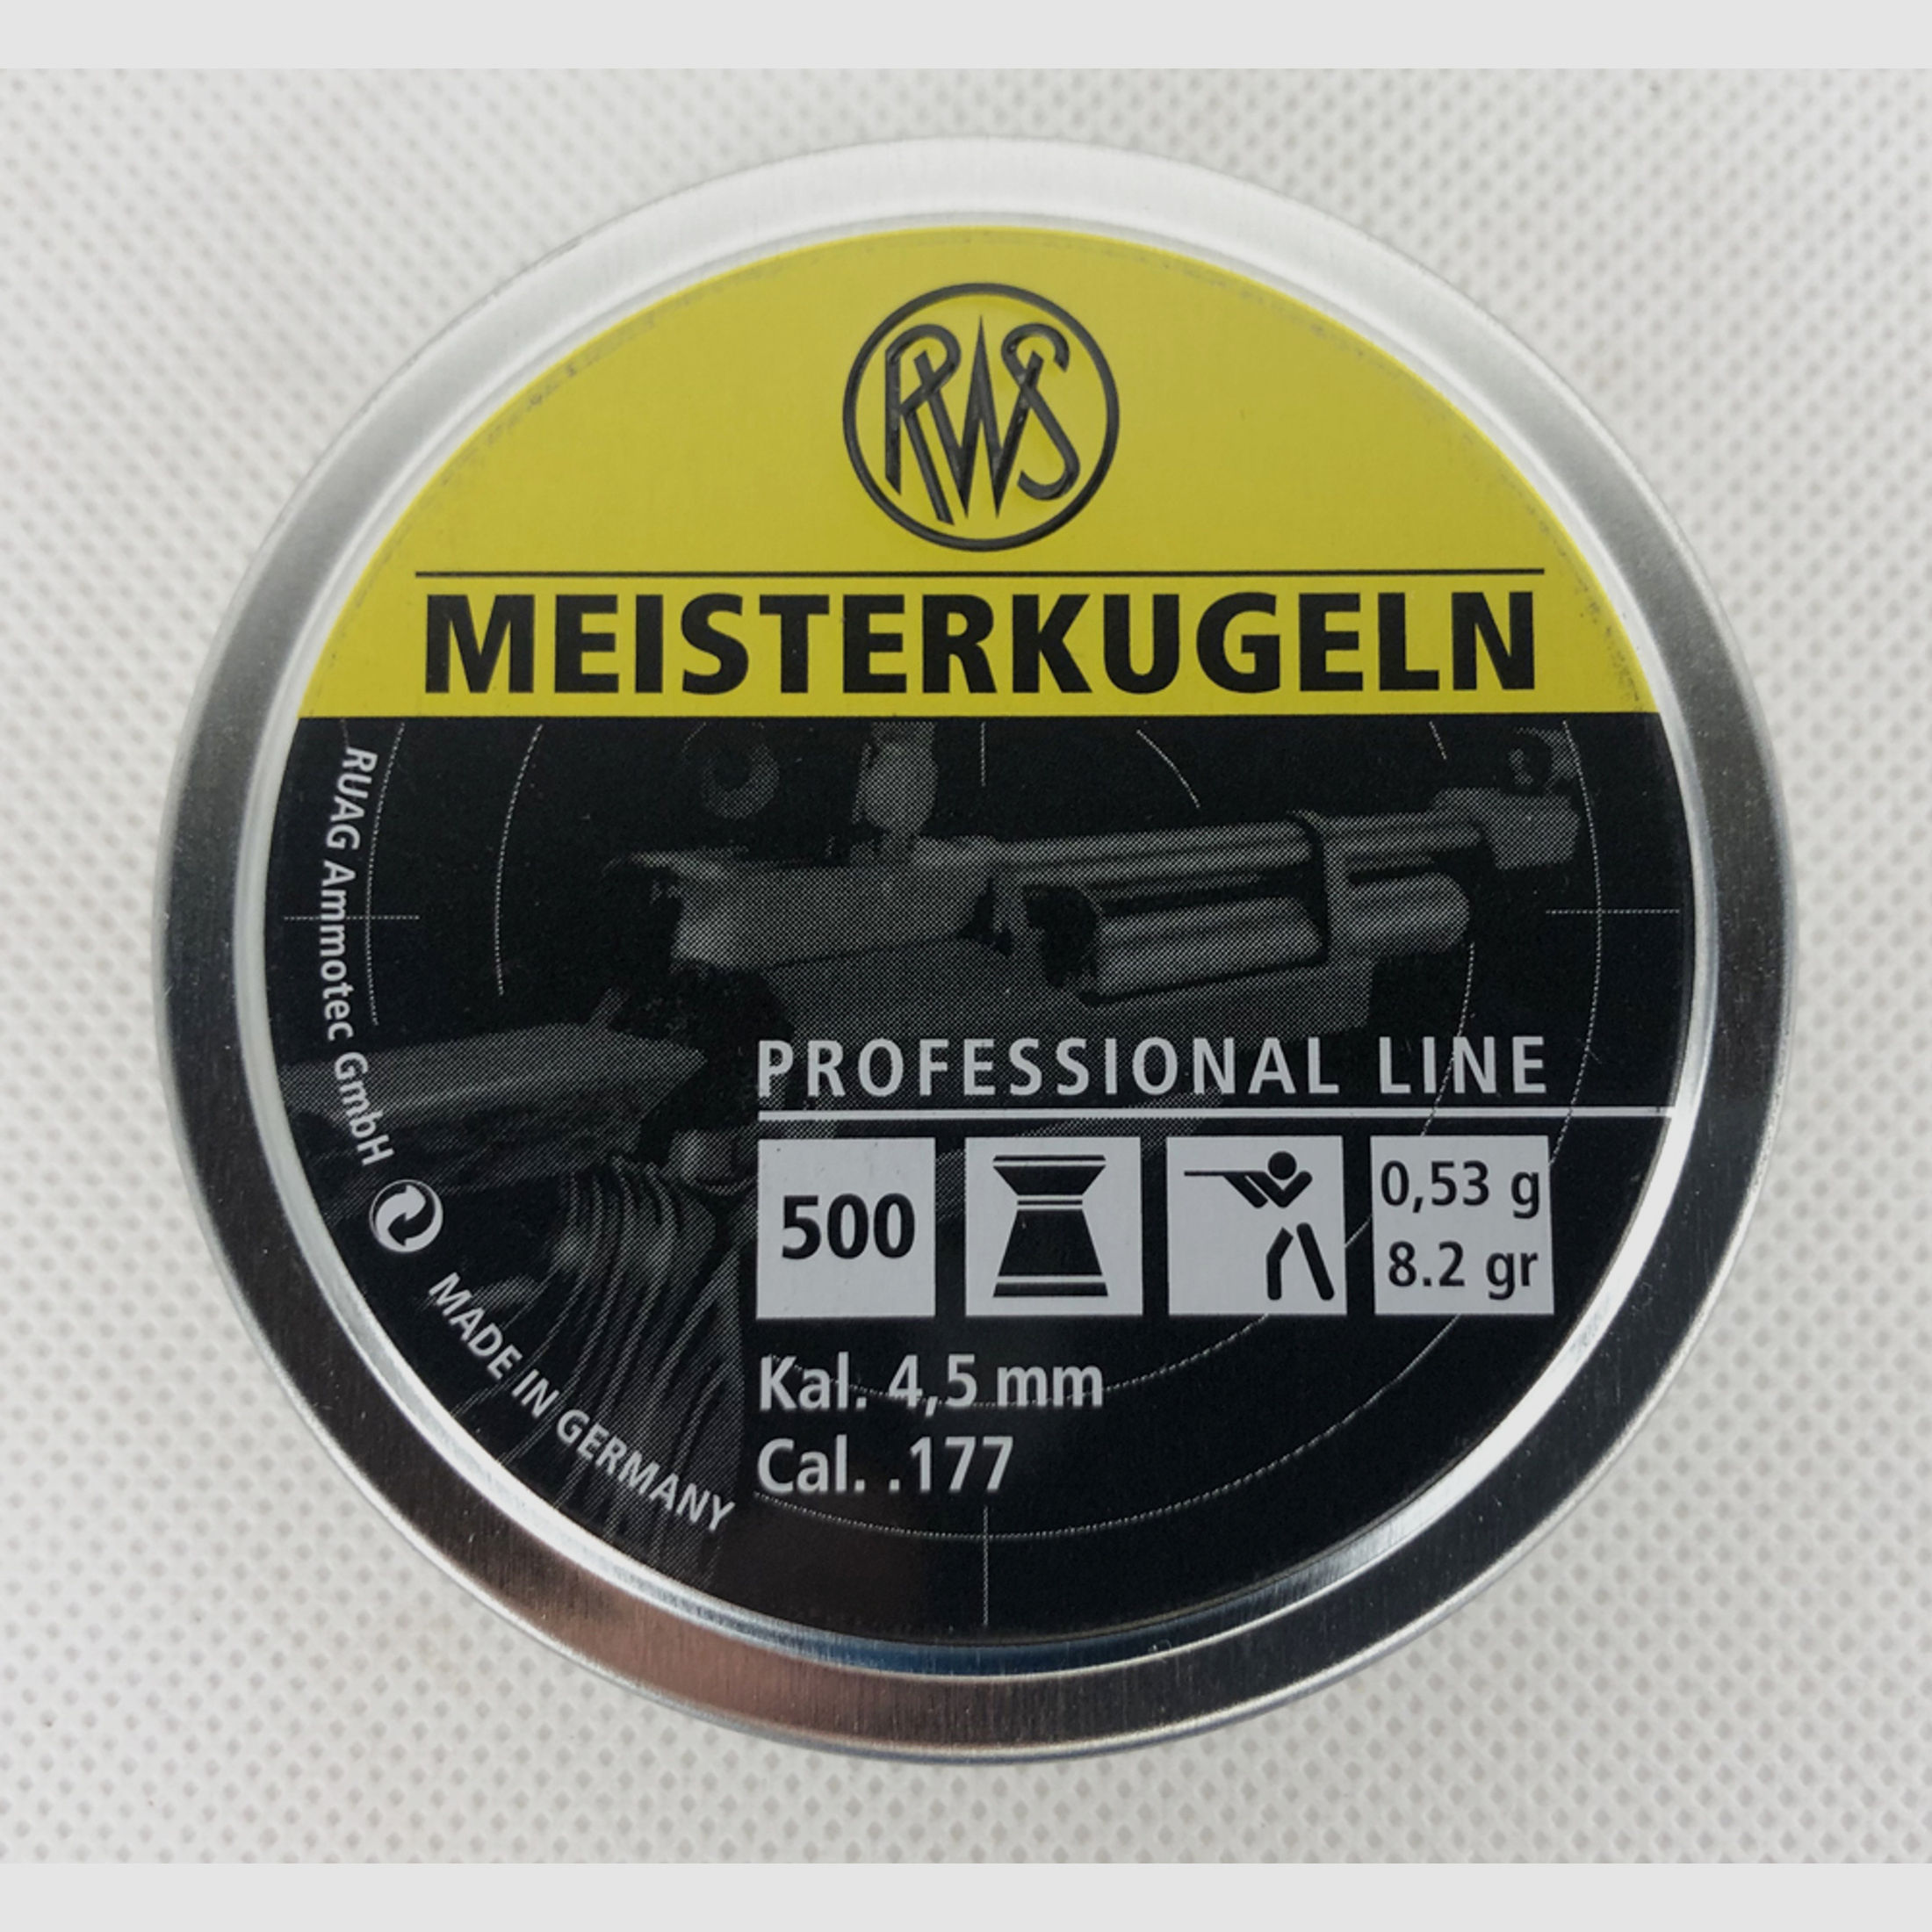 RWS Professional Line Diabolos Meisterkugeln 0,53 g